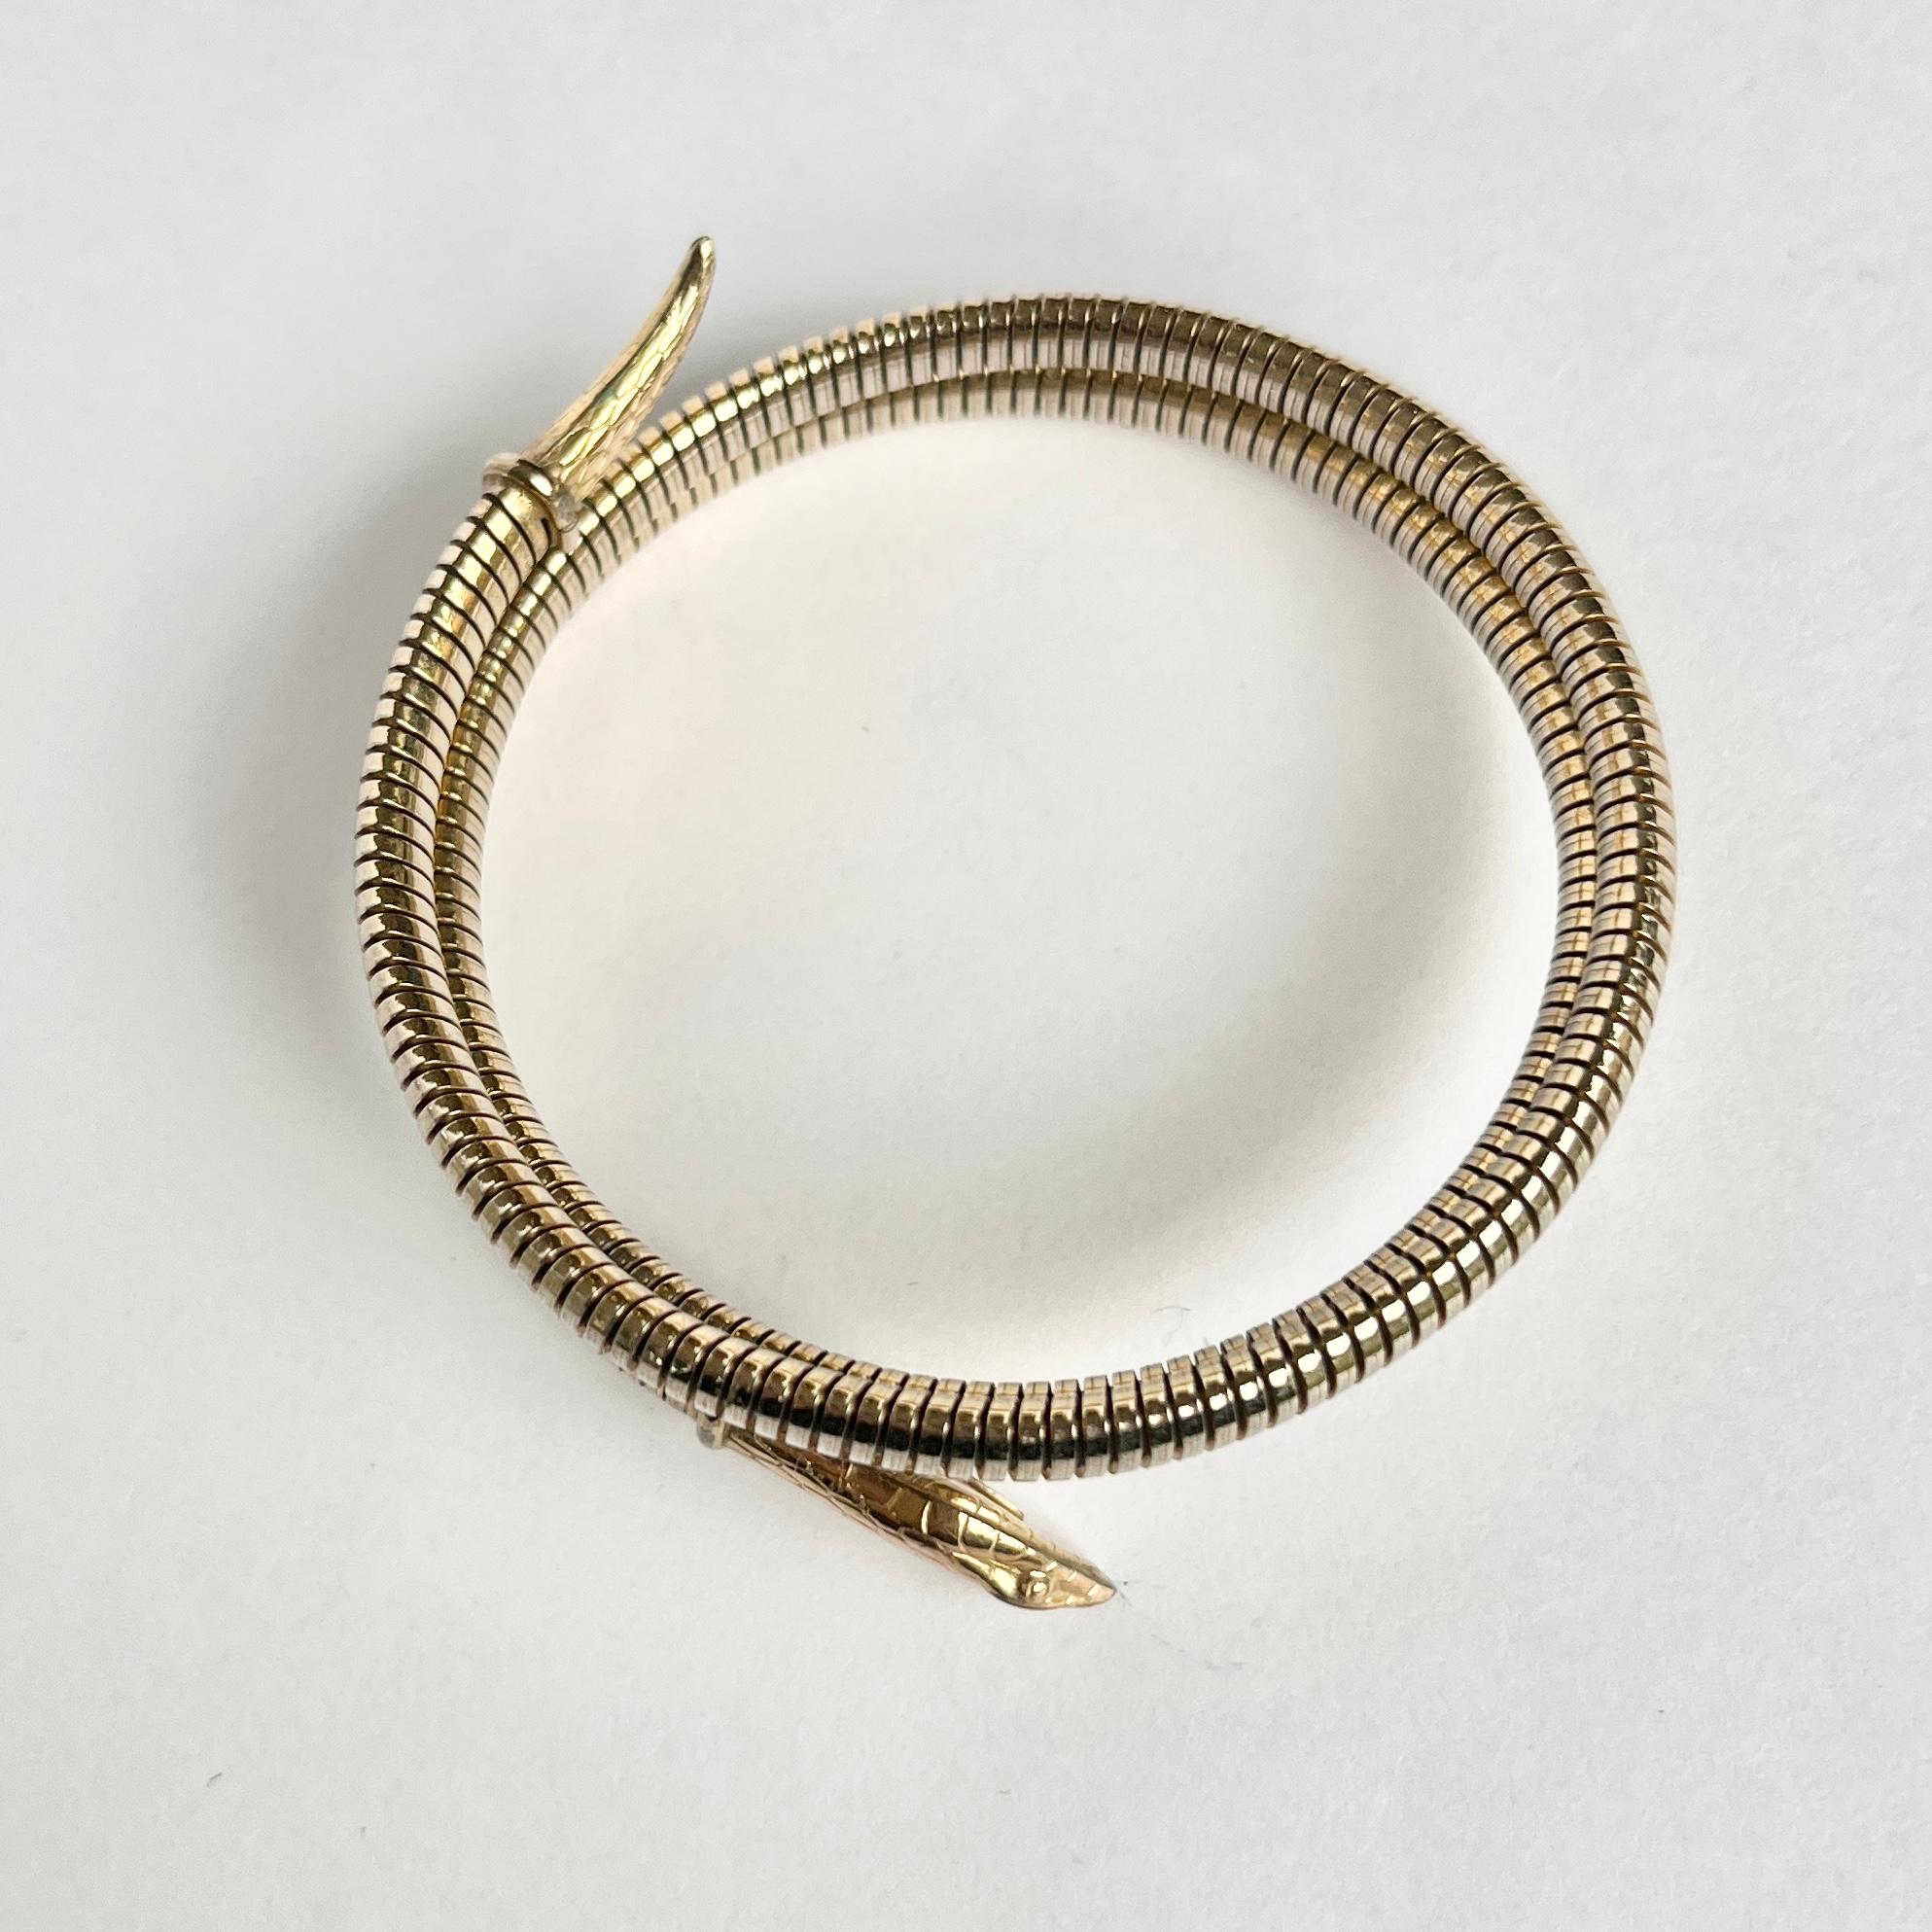 9ct gold snake bracelet